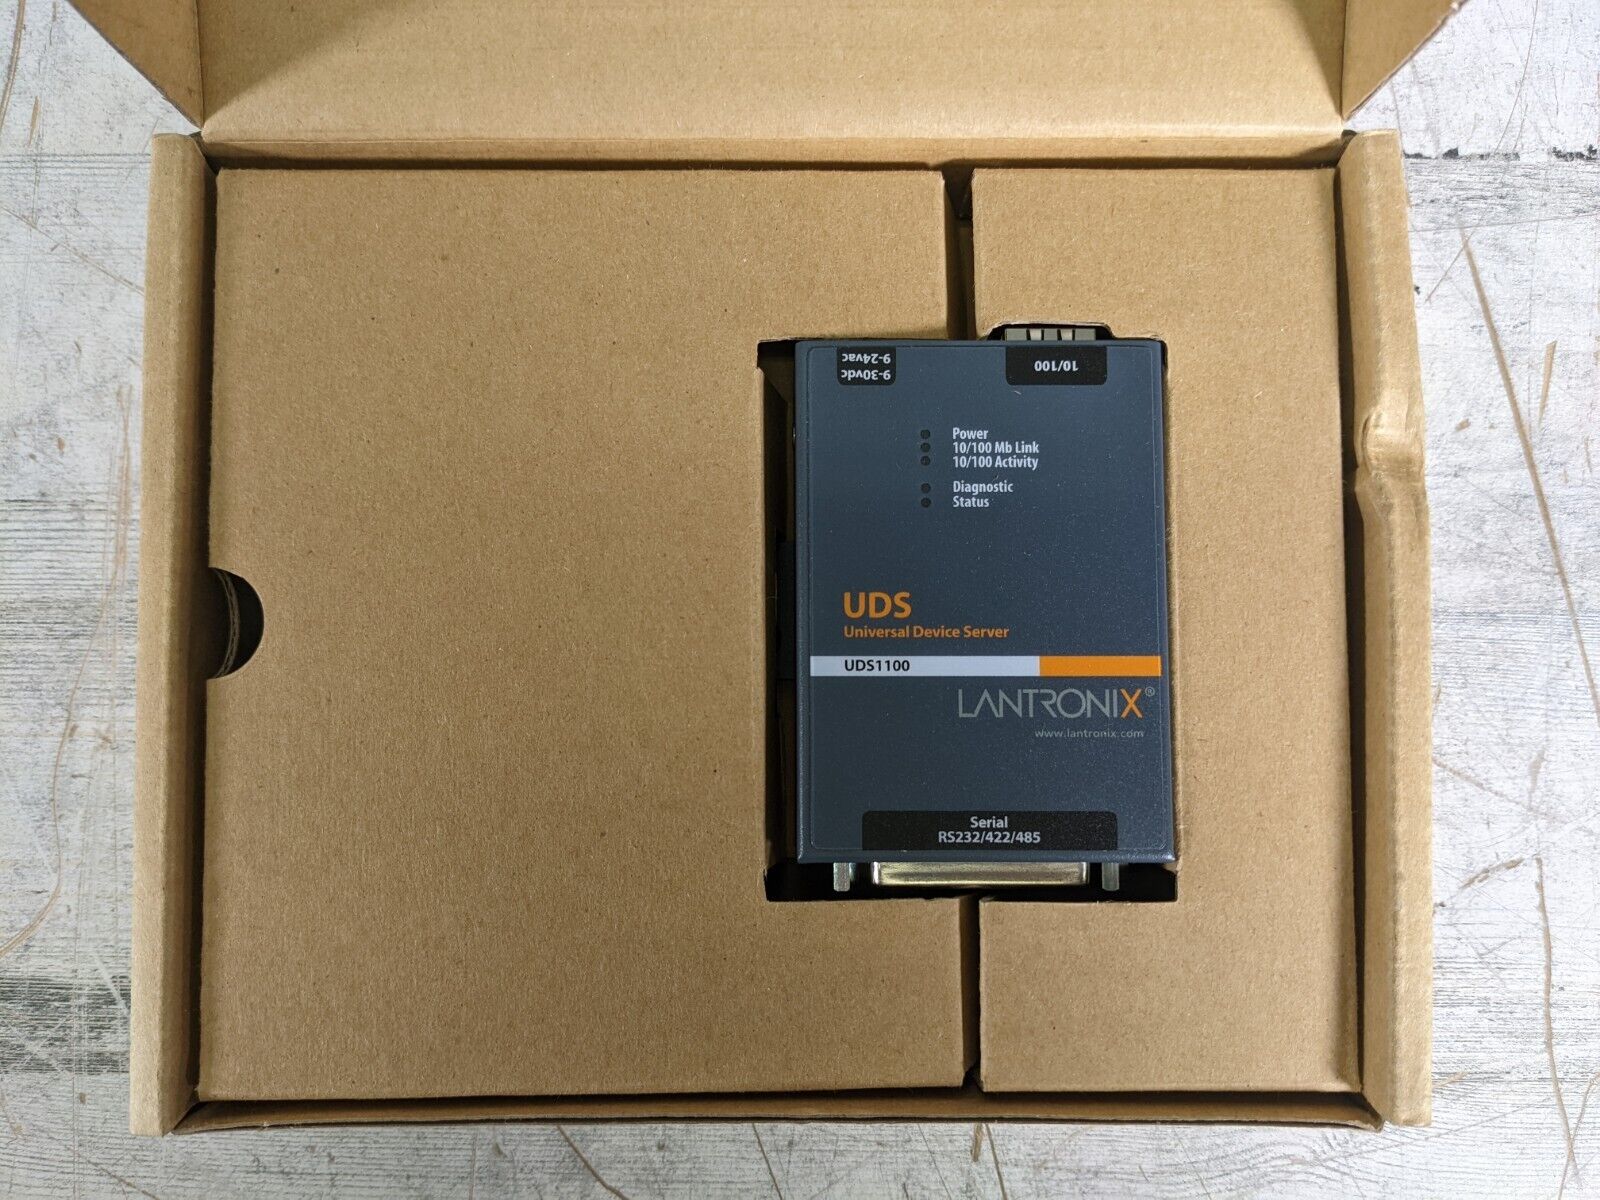 LANTRONIX UDS1100 1-PORT UNIVERSAL DEVICE SERVER - (NEW SEALED BOX)